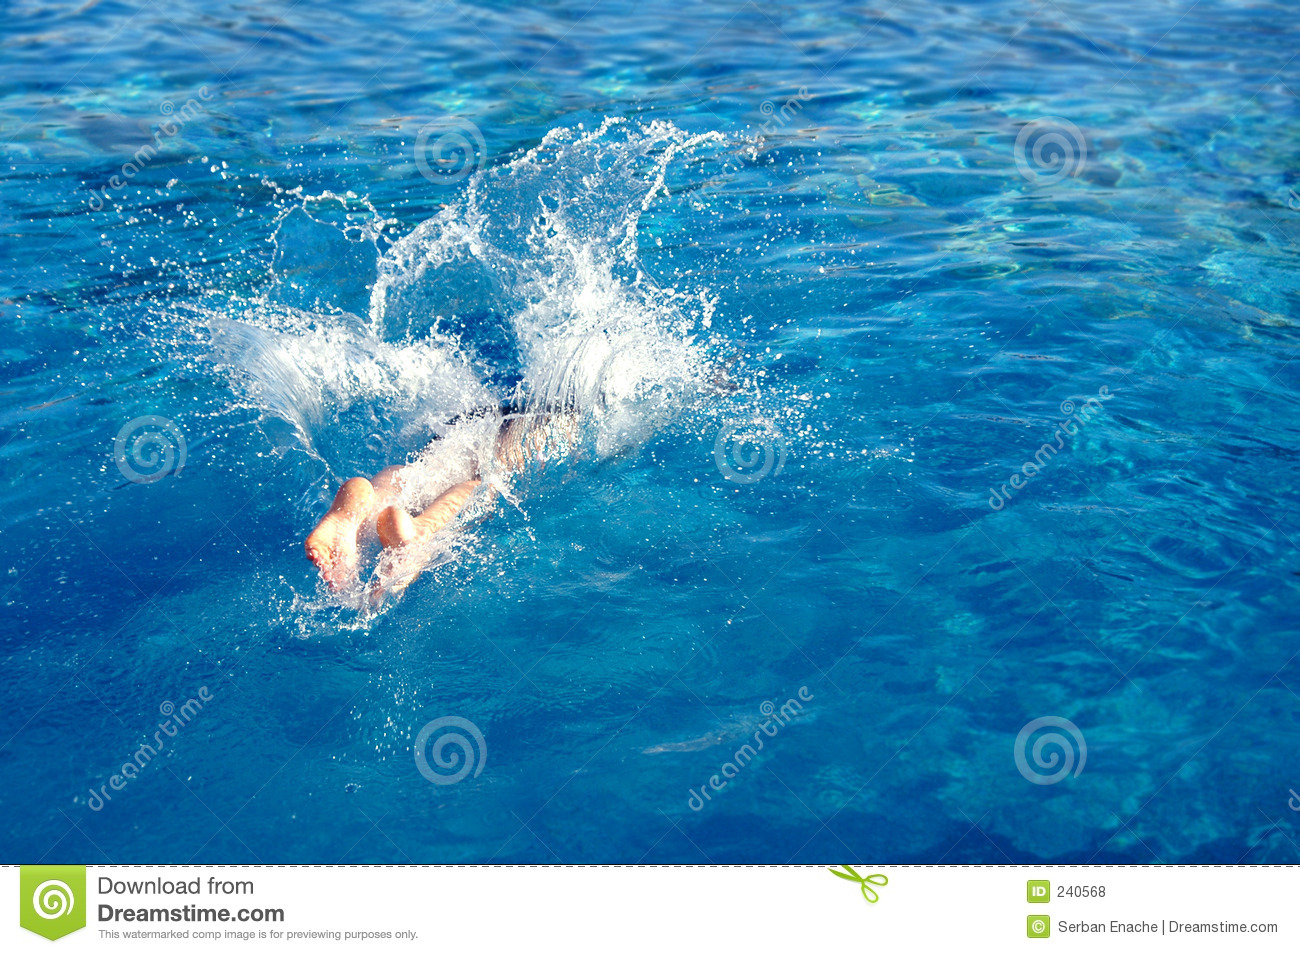 Man S Feet Splashing In Blue Water  Water Drops And Legs Area In Focus